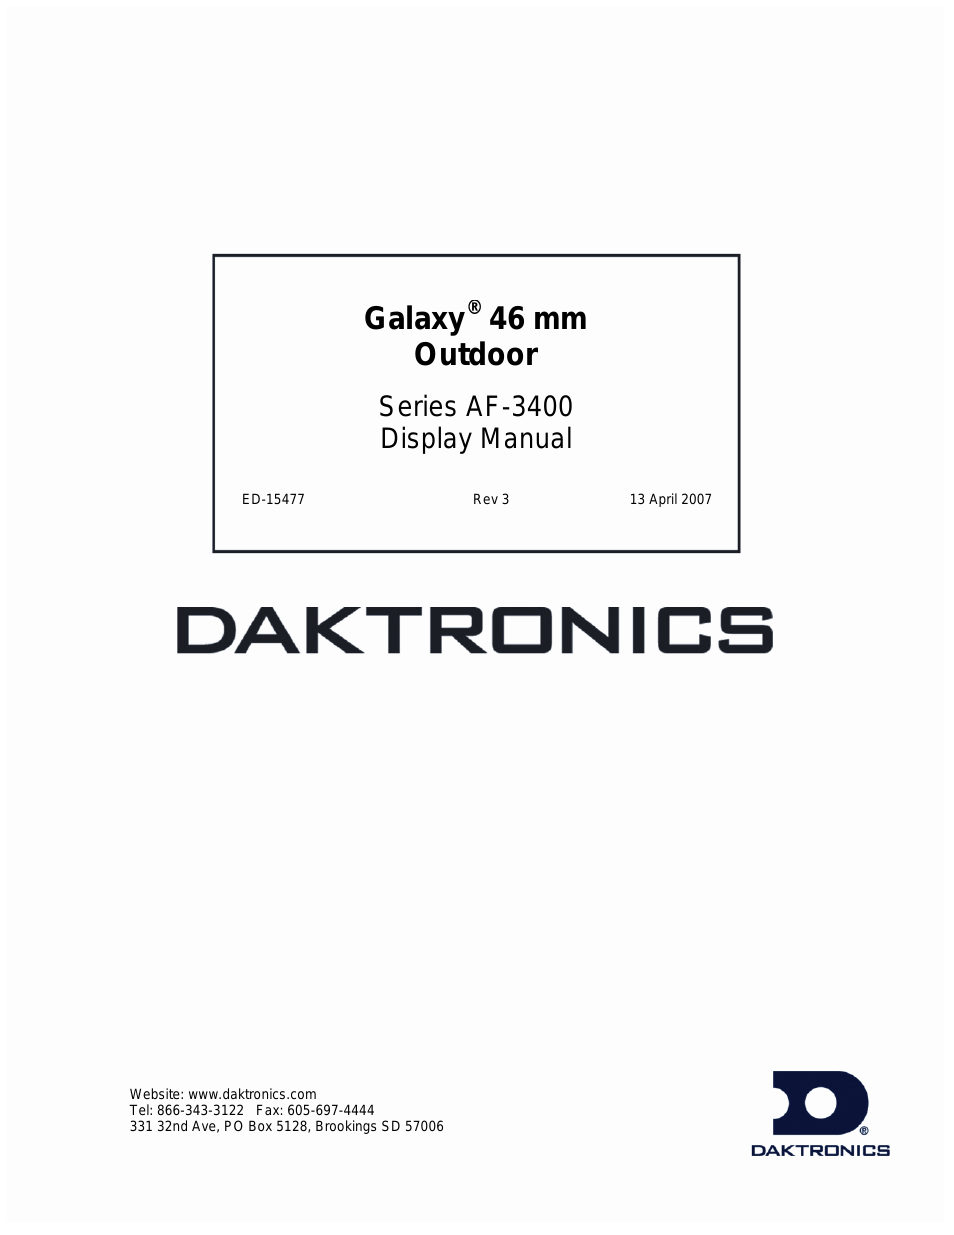 Galaxy 46 mm Outdoor Series AF-3400